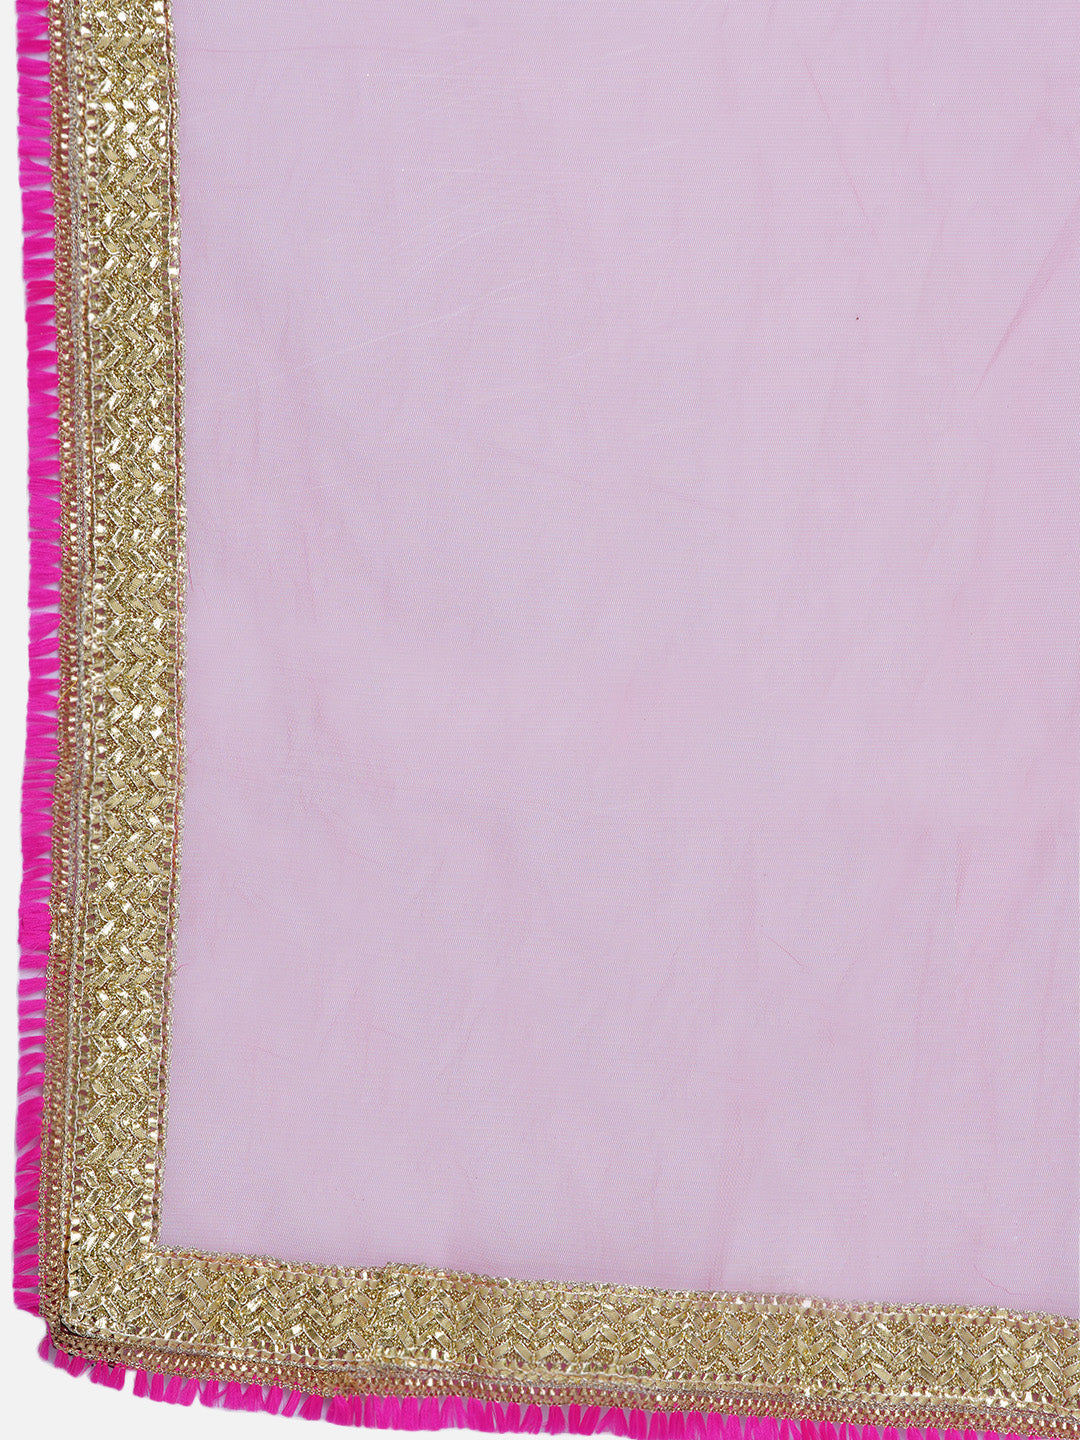 Girls Pink & White Printed Ready To Wear Lehenga & Blouse With Dupatta - Bitiya By Bhama